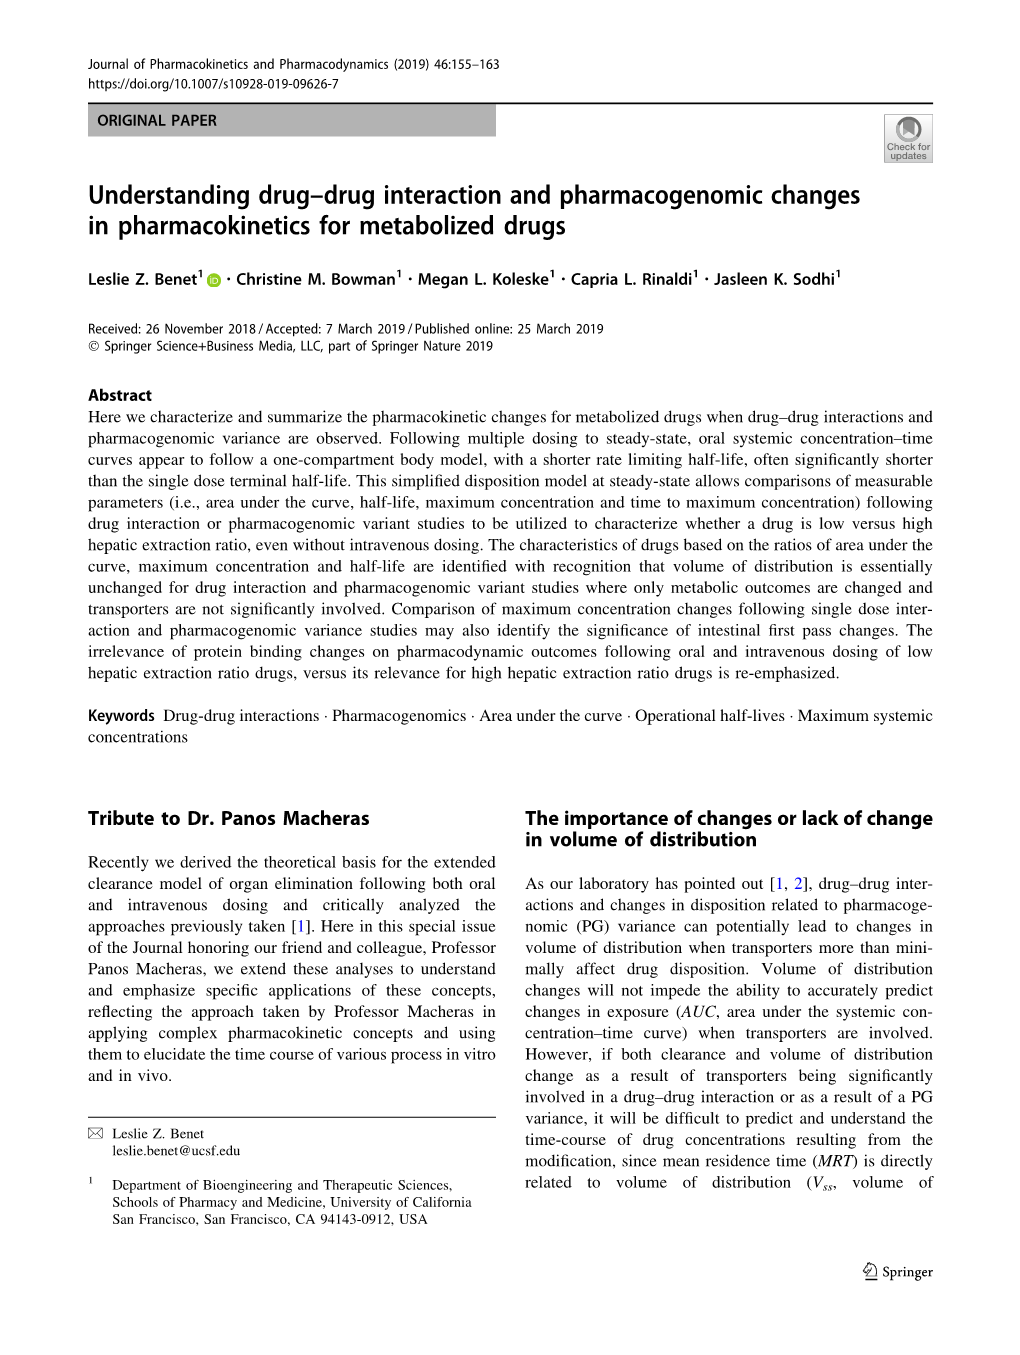 Understanding Drug–Drug Interaction and Pharmacogenomic Changes in Pharmacokinetics for Metabolized Drugs